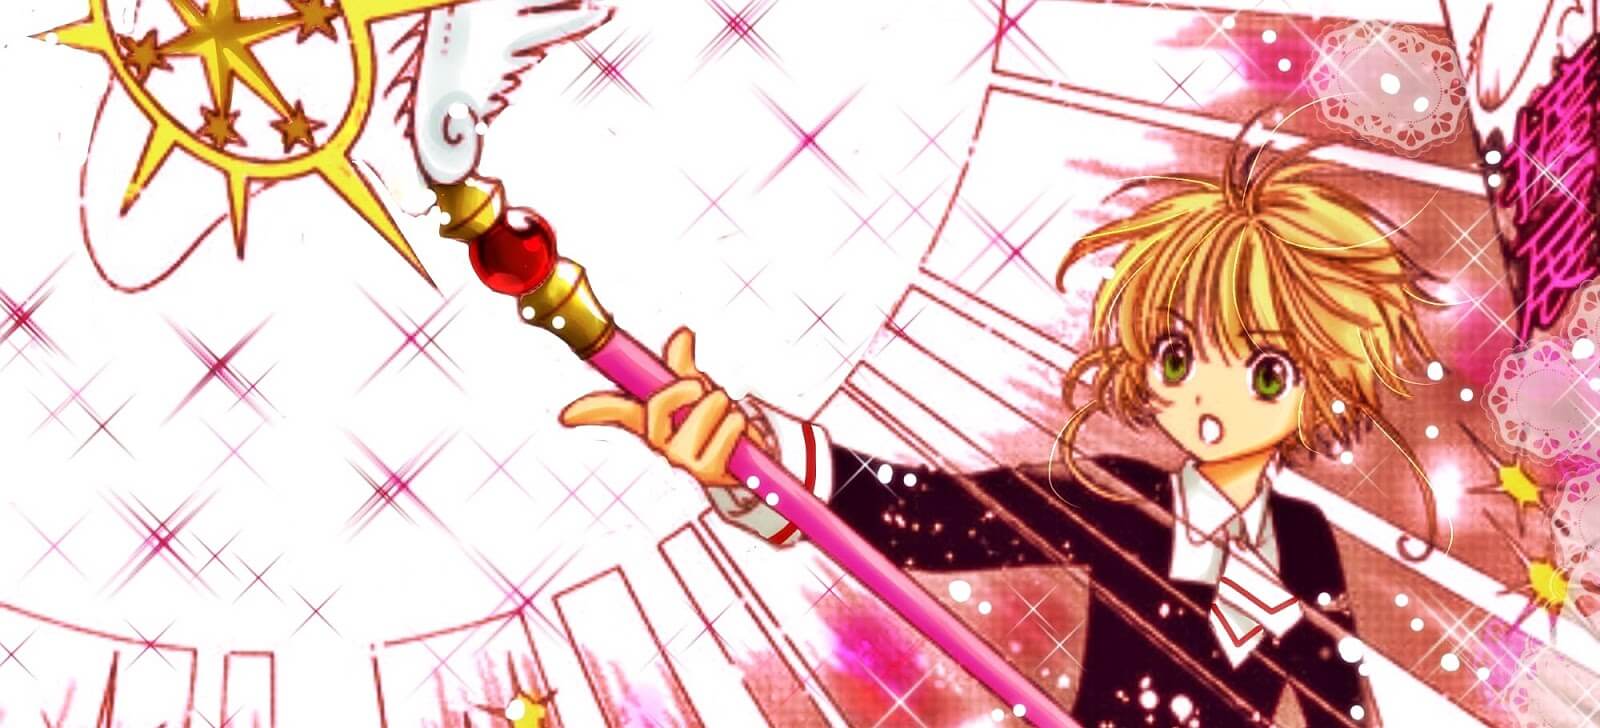 Sakura Card Captors  Anime captura nova temporada em 2018 - NerdBunker